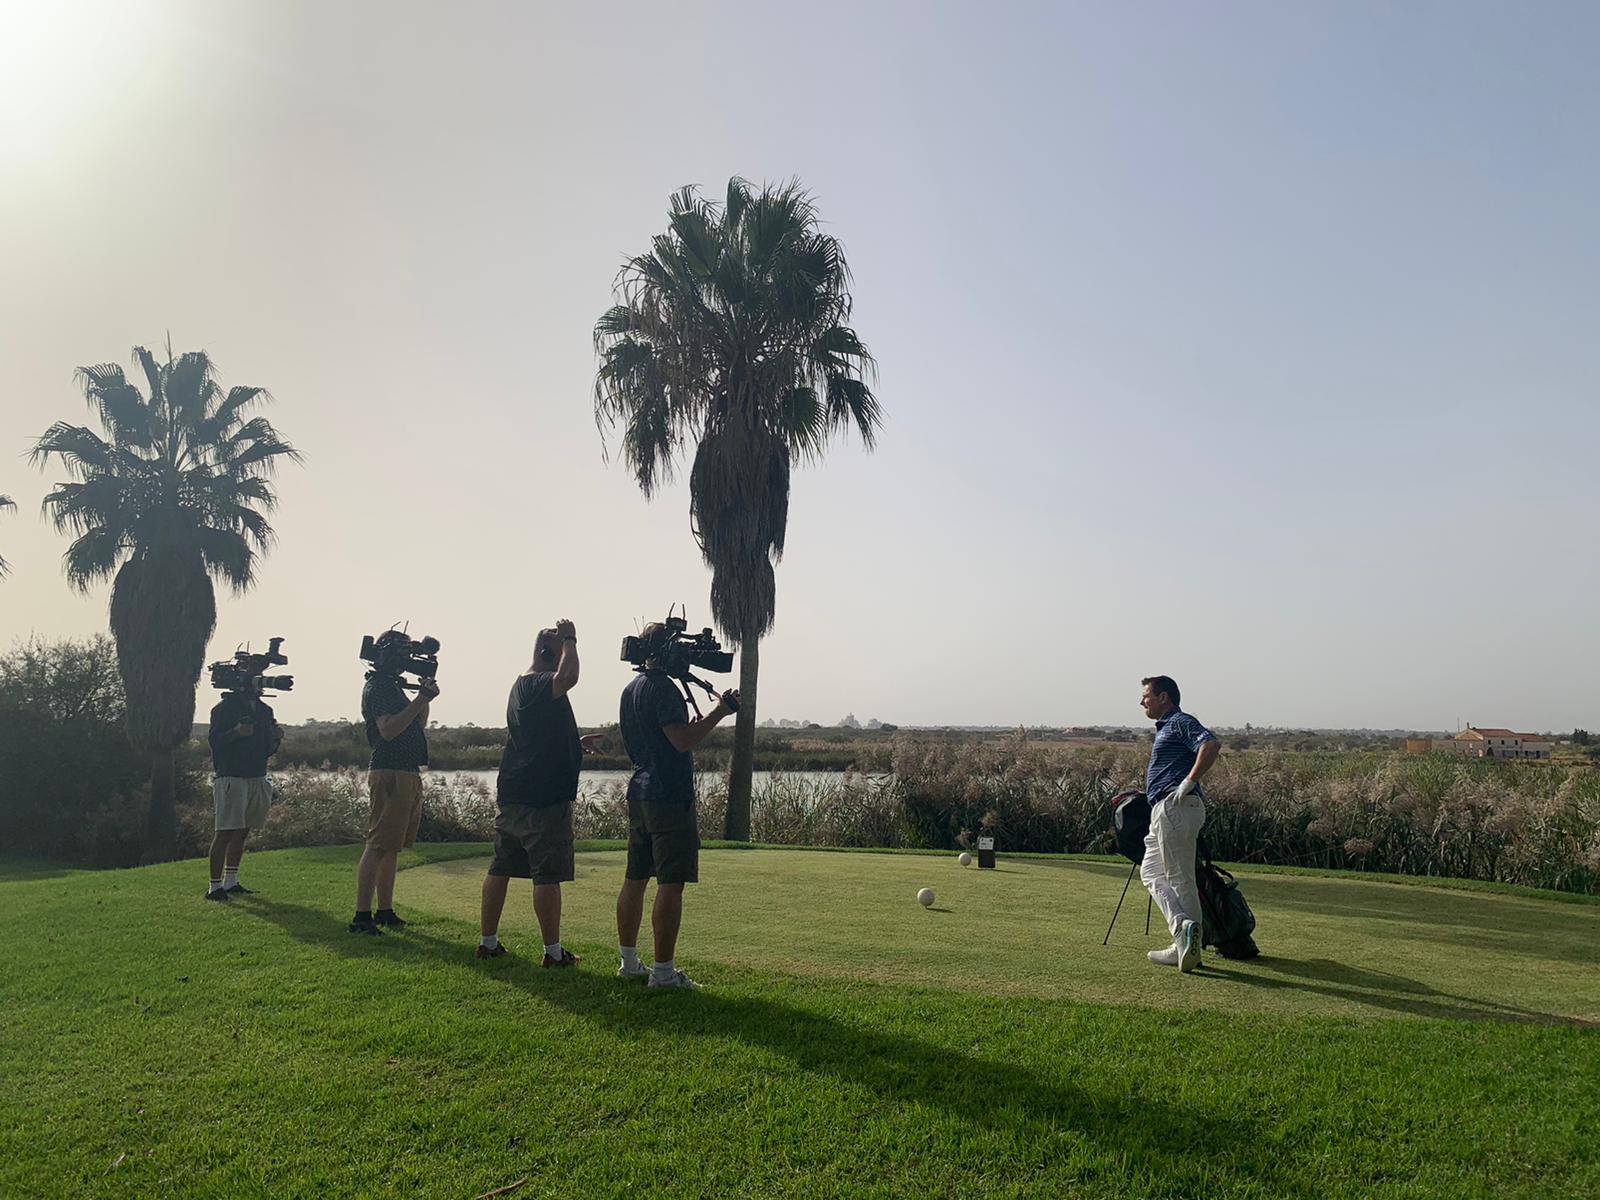 Golf’s Greatest Holes - TV Serie dreht neue Folgen in Portugal￼